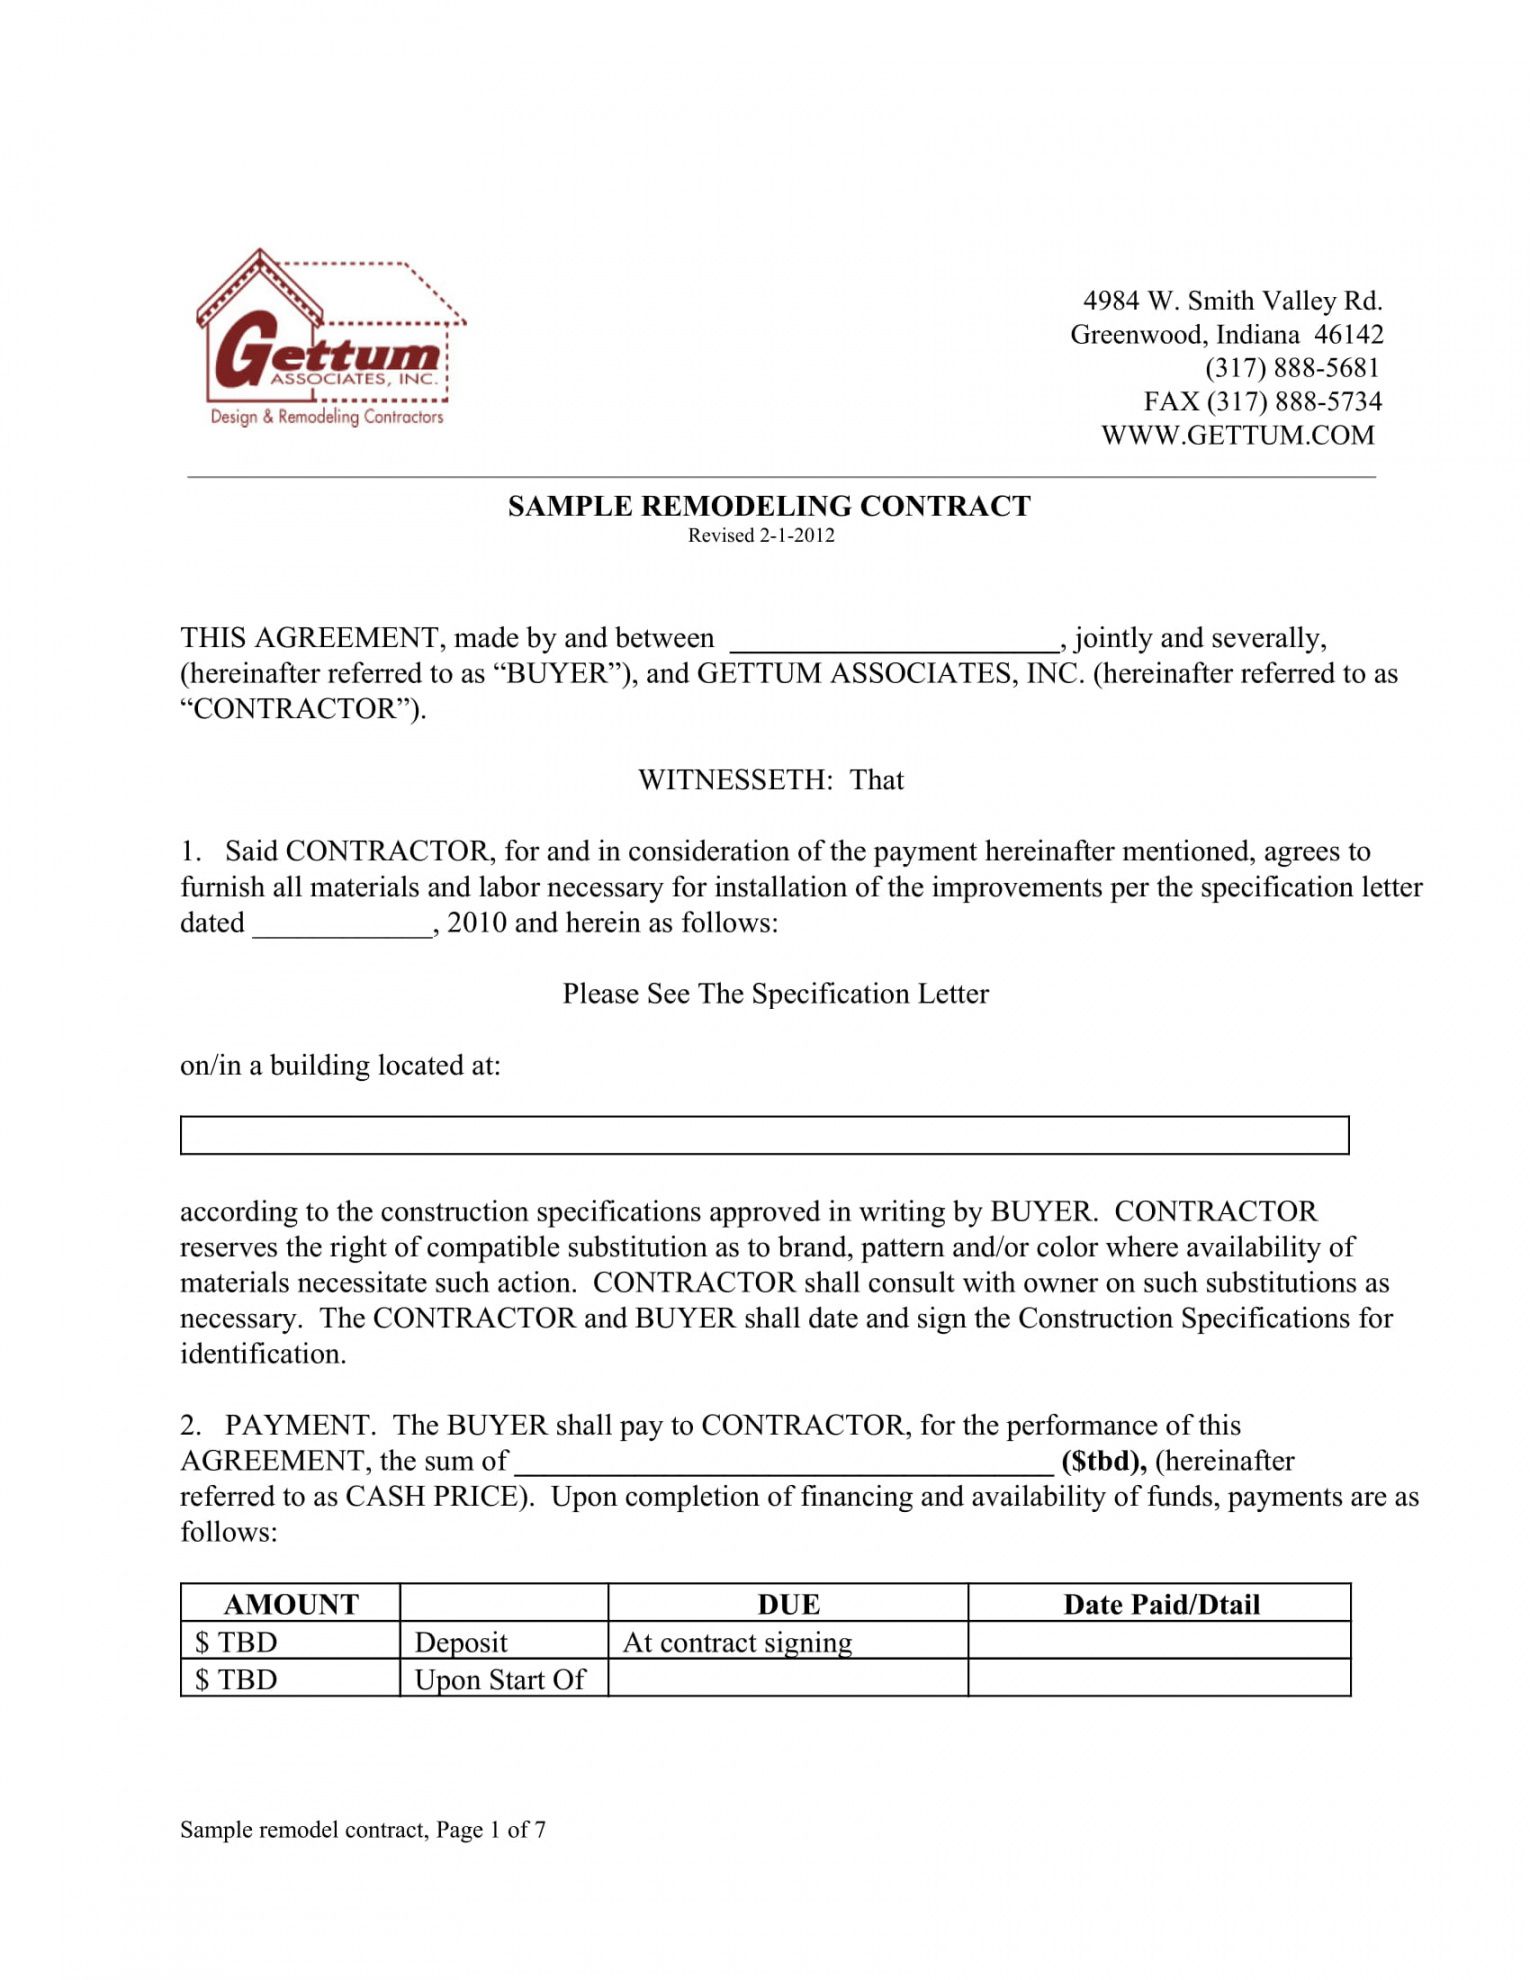 editable 10 bathroom renovation contract template examples  pdf bathroom remodel proposal template pdf